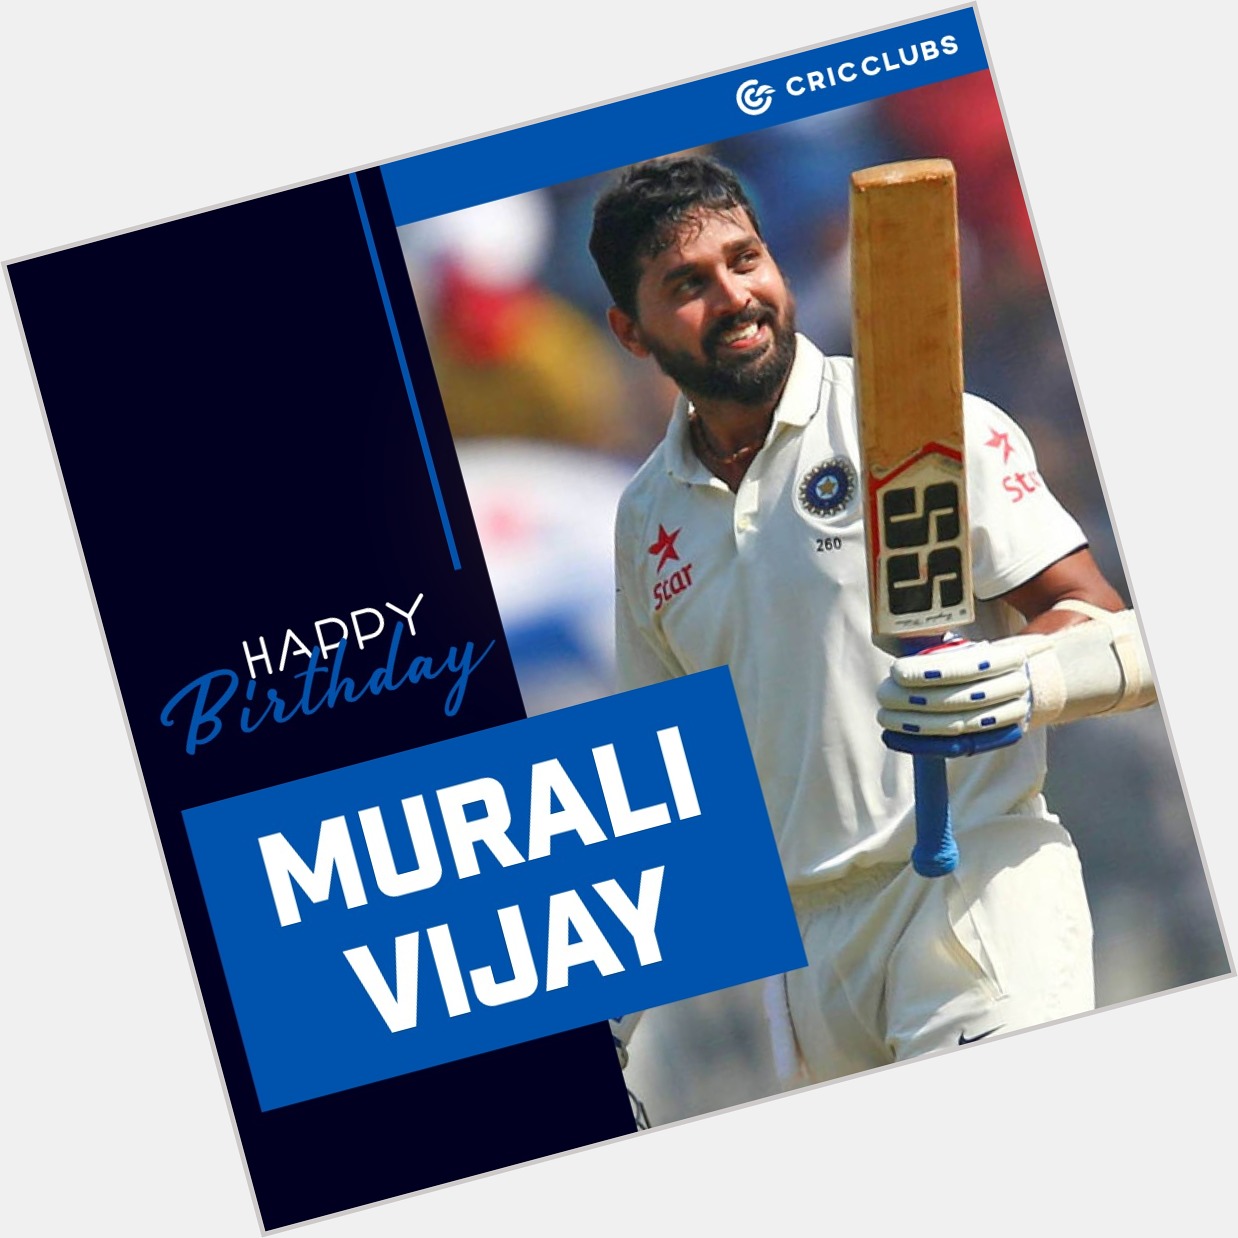 Here\s wishing the former Indian batsman \Murali Vijay\ a very Happy Birthday 